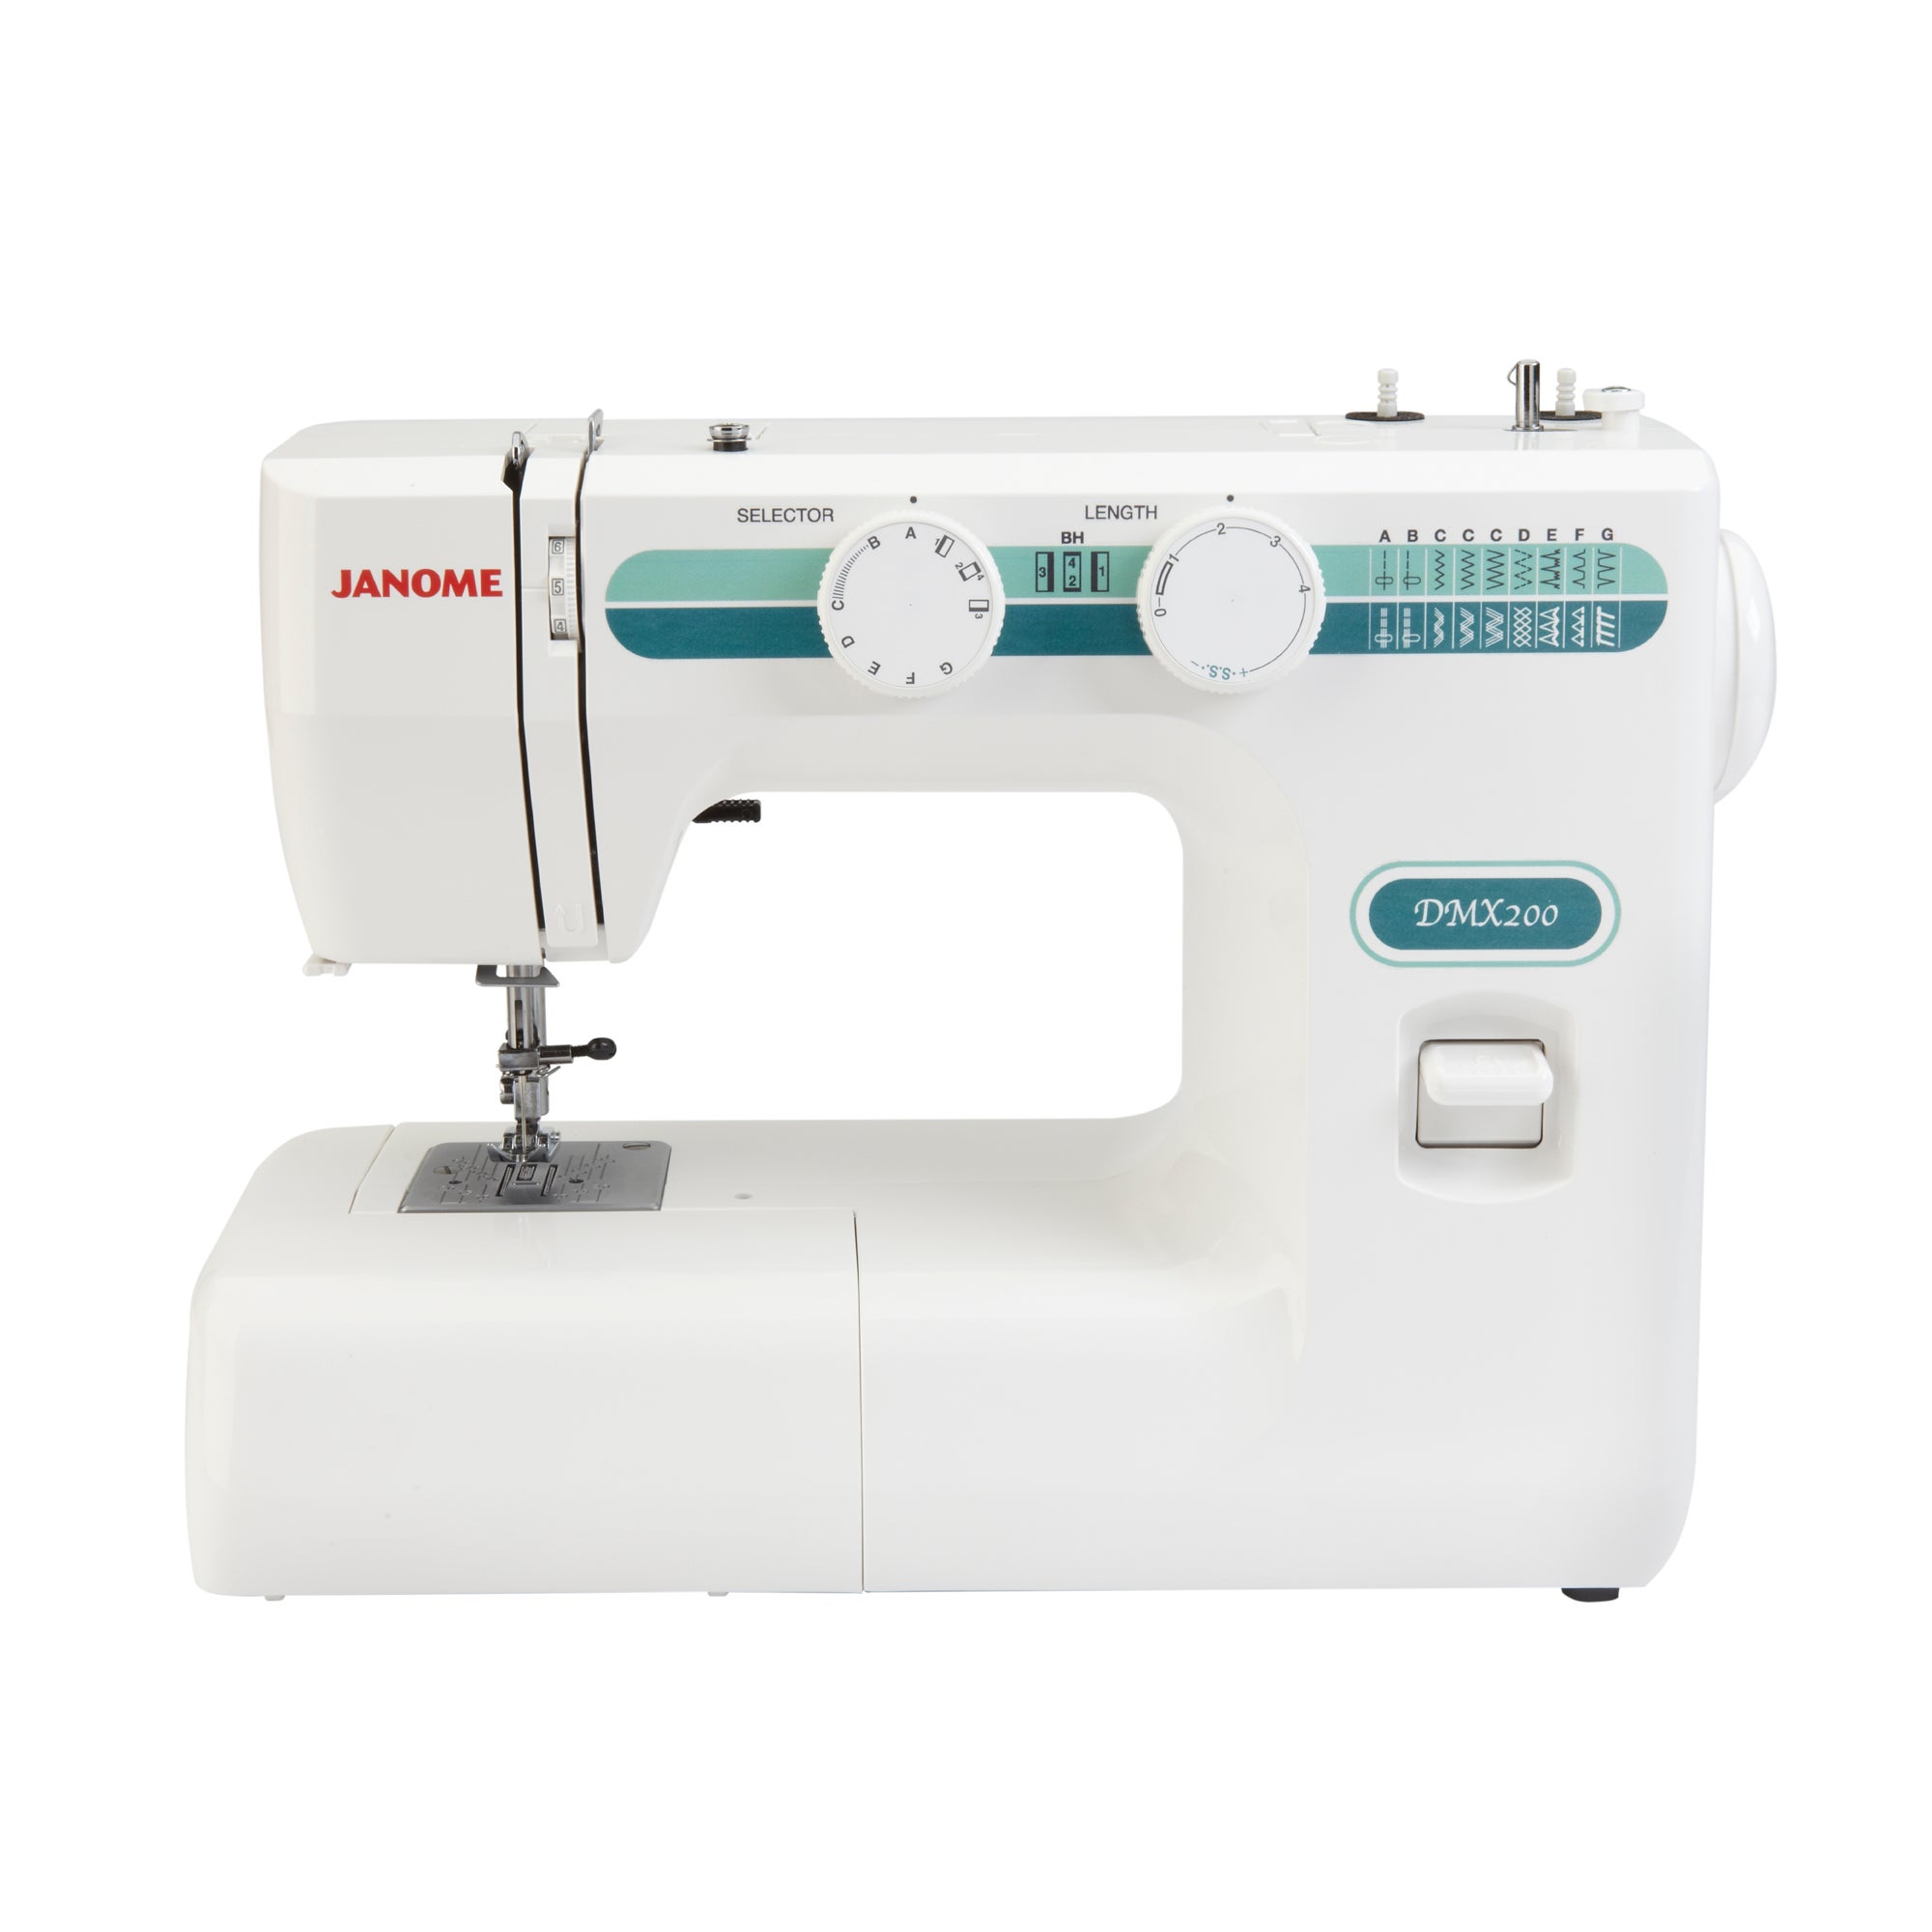 Janome DMX200 Sewing Machine